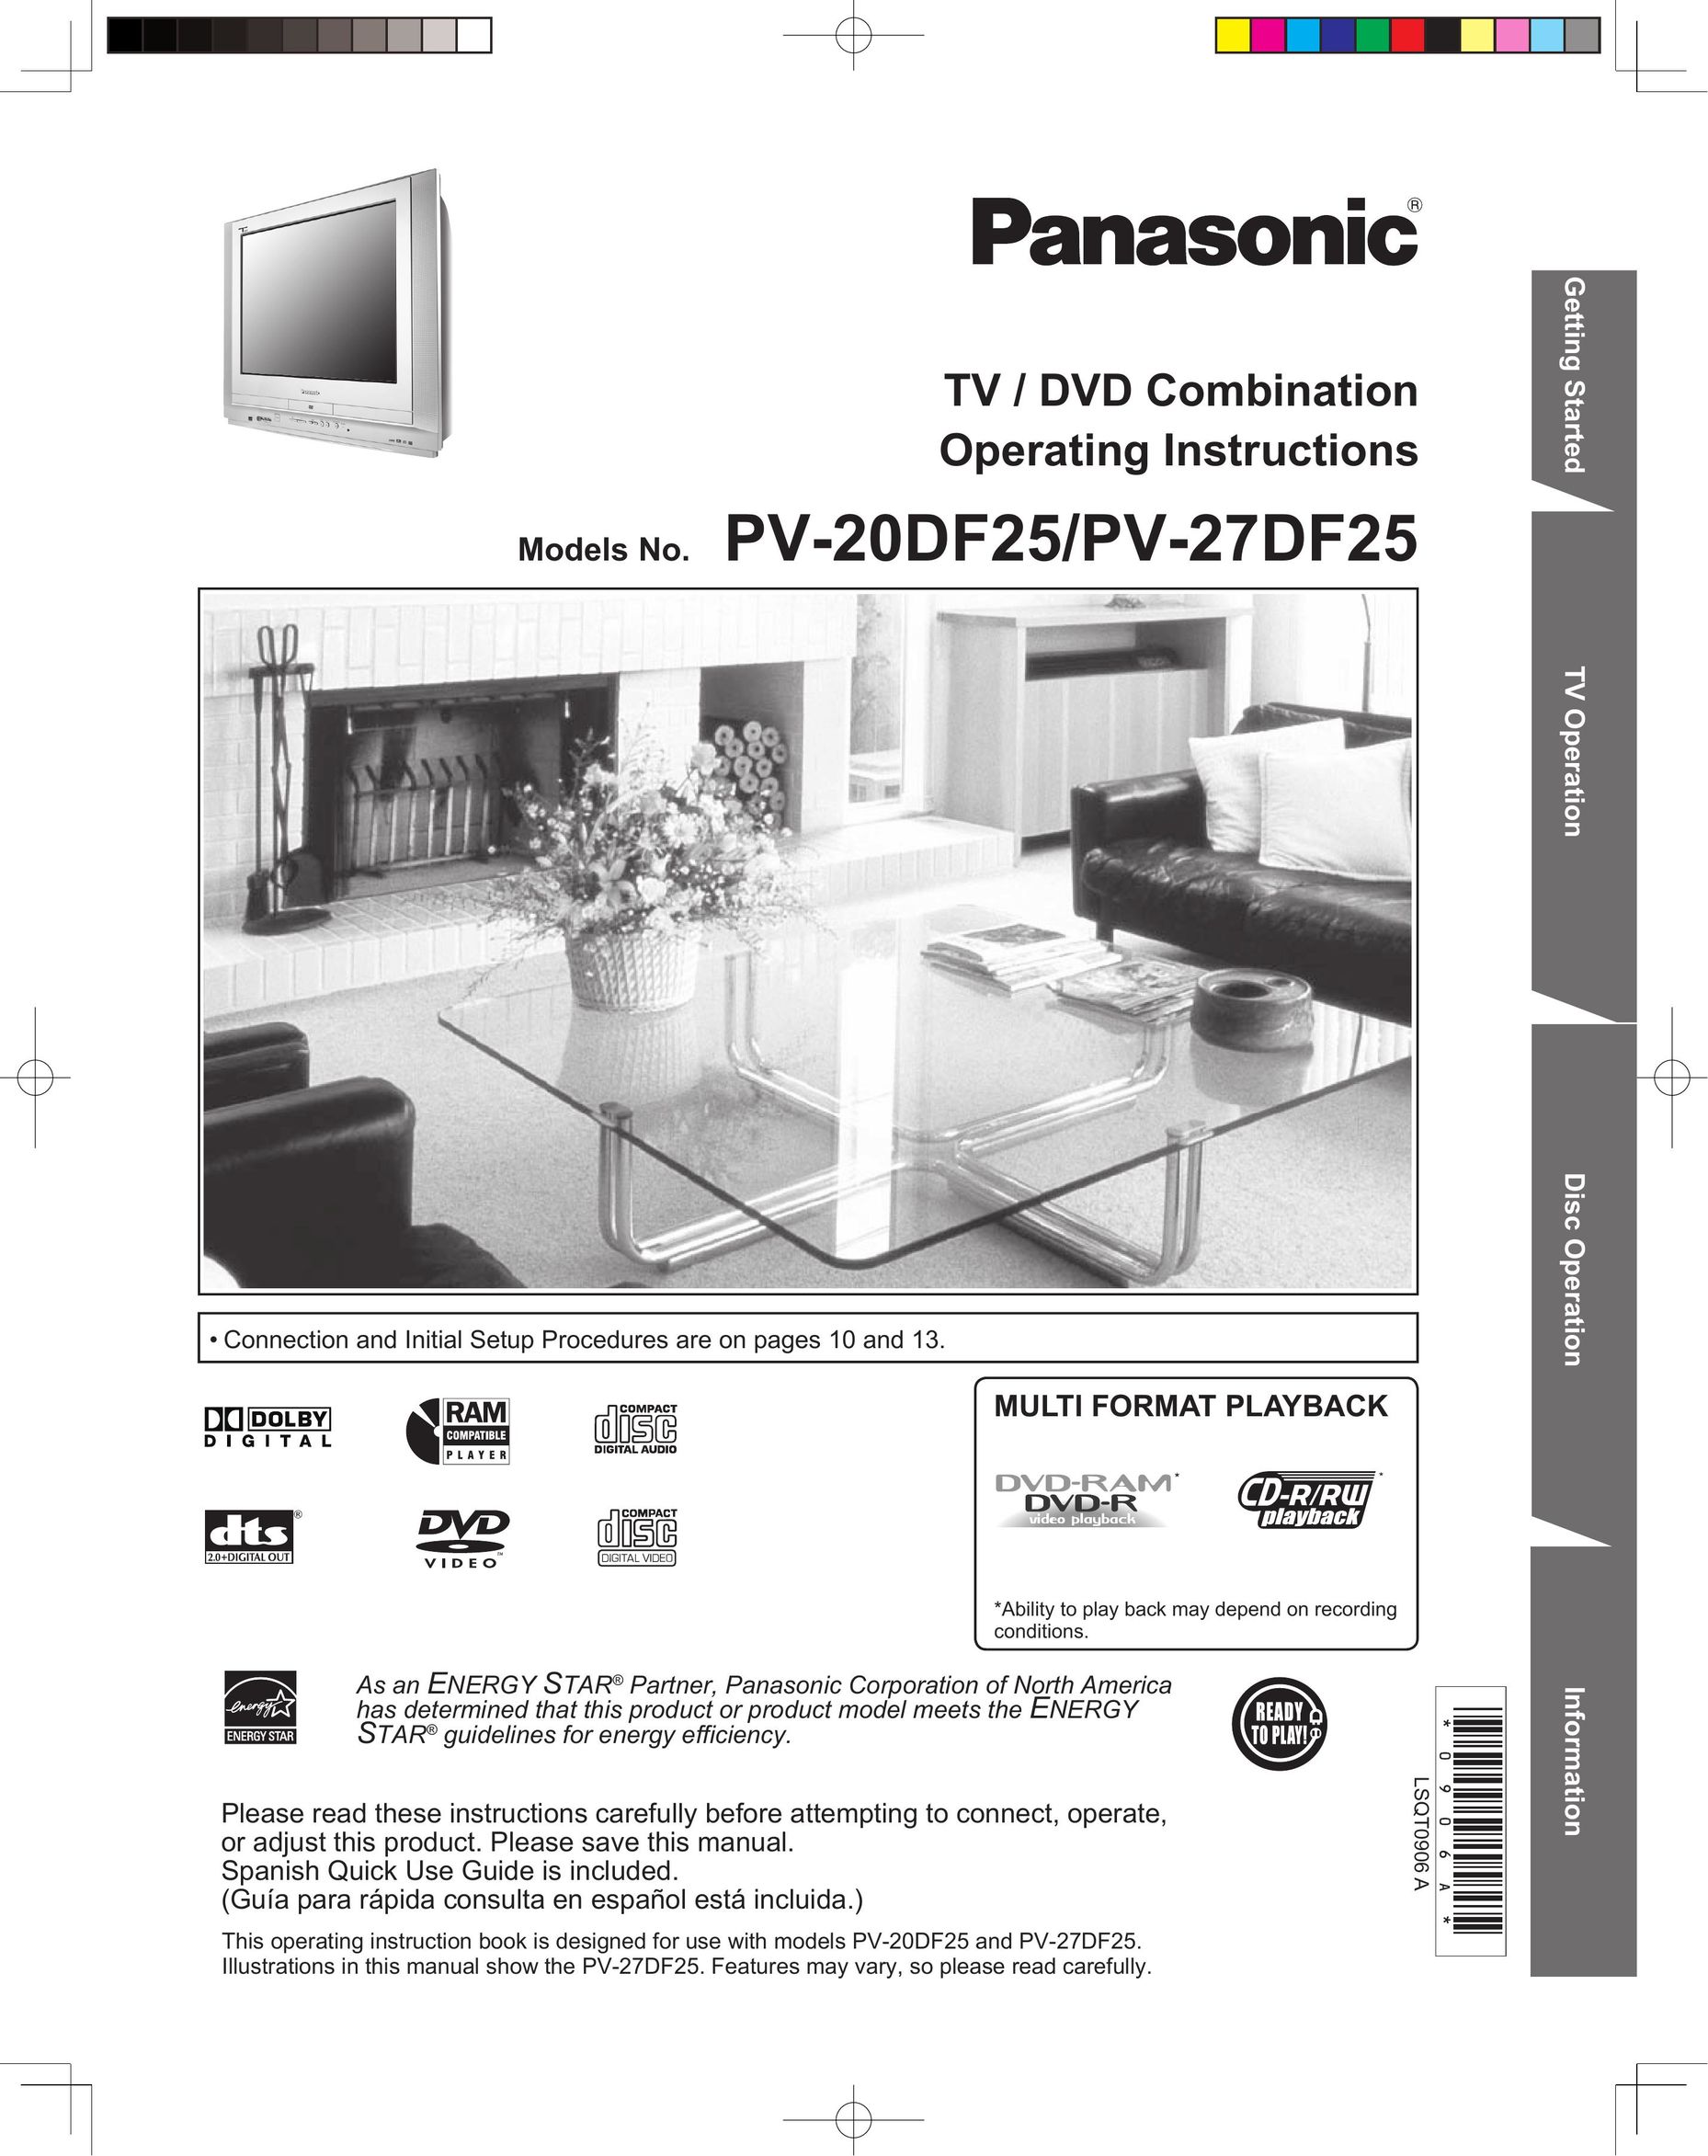 Panasonic PV 20DF25 TV DVD Combo User Manual